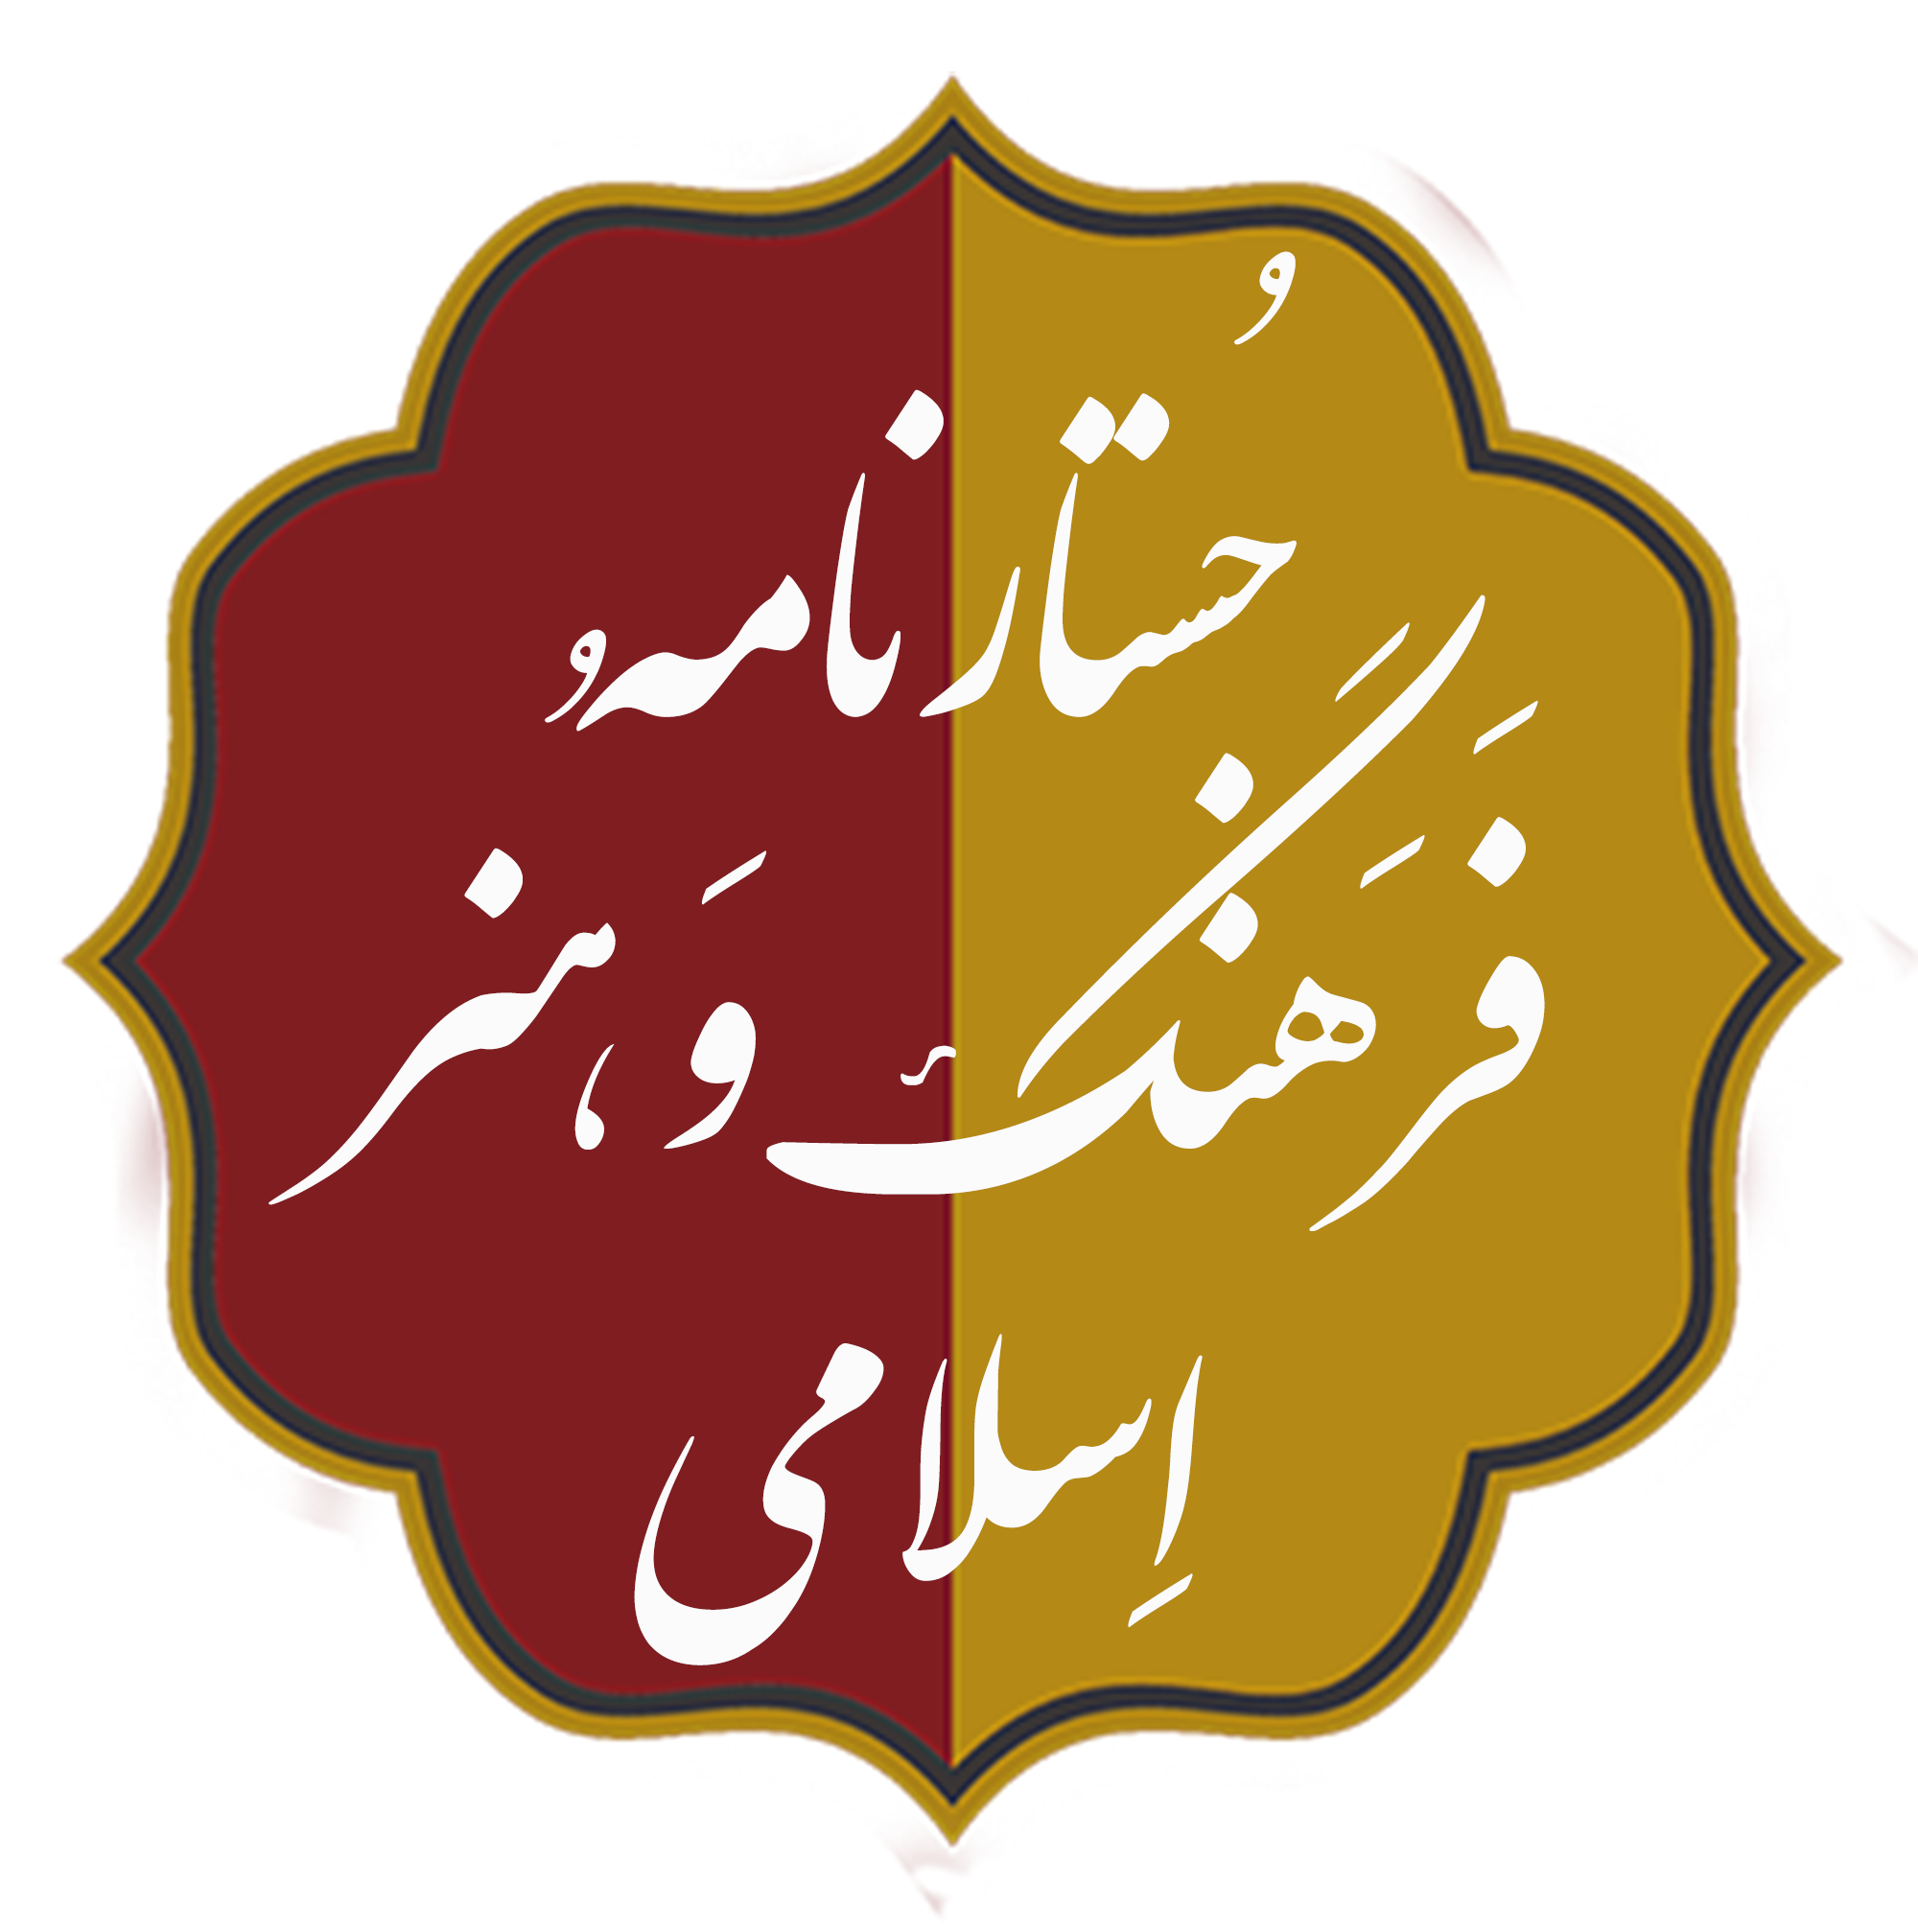 File:جستارنامه فرهنگ و هنر اسلامی.png - Wikimedia Commons